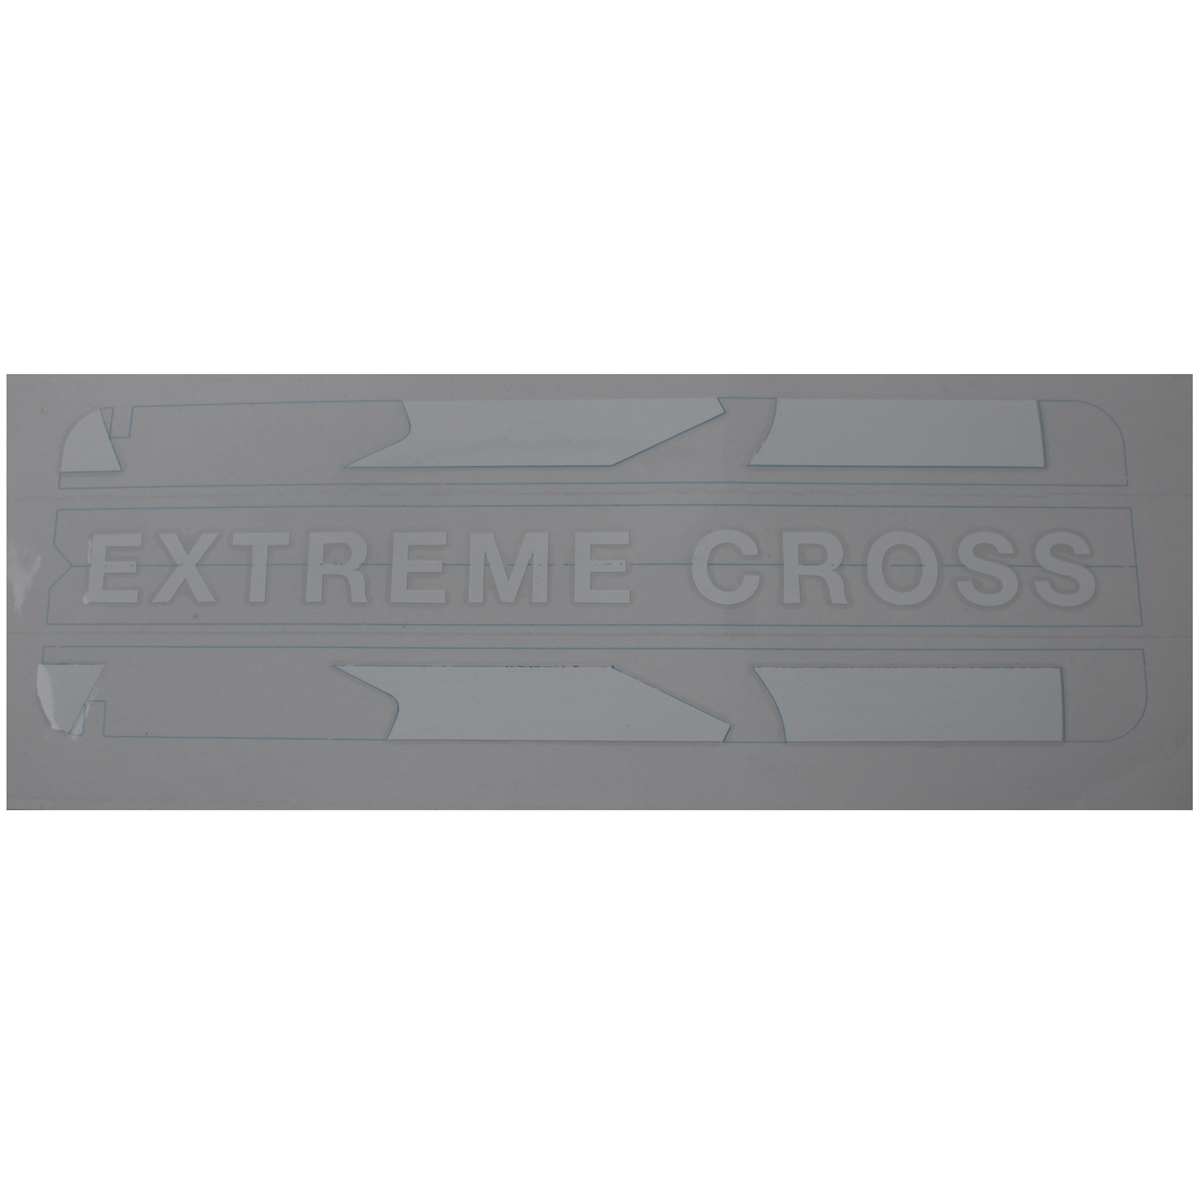 Adhesivo tapa batería Extreme Cross blanco